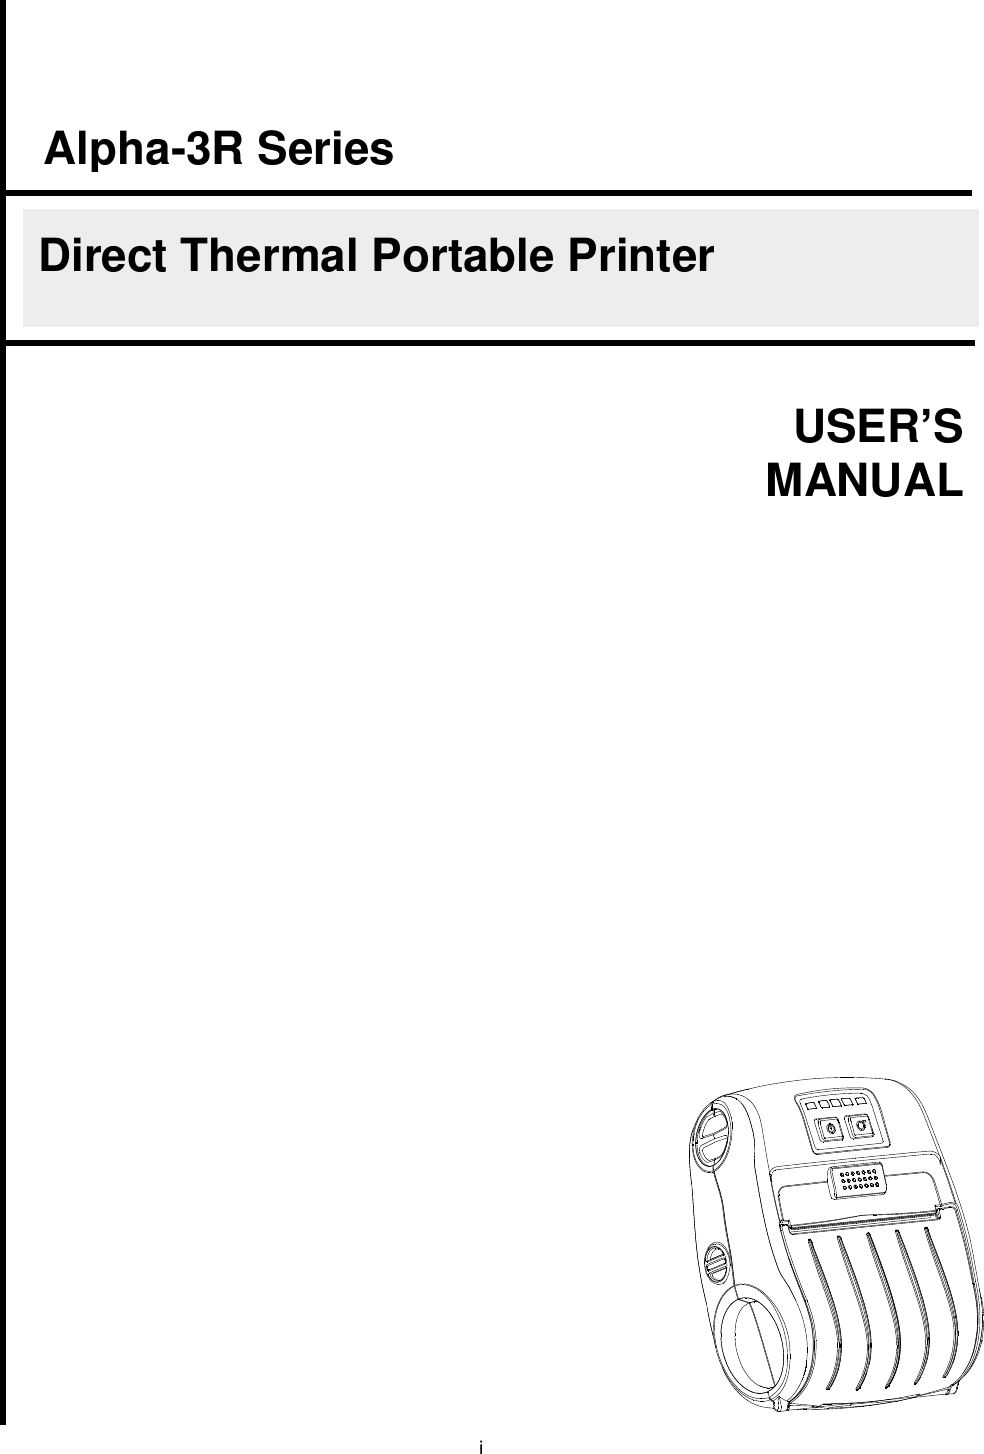 i                                      USER’S      MANUAL Alpha-3R Series  Direct Thermal Portable Printer 